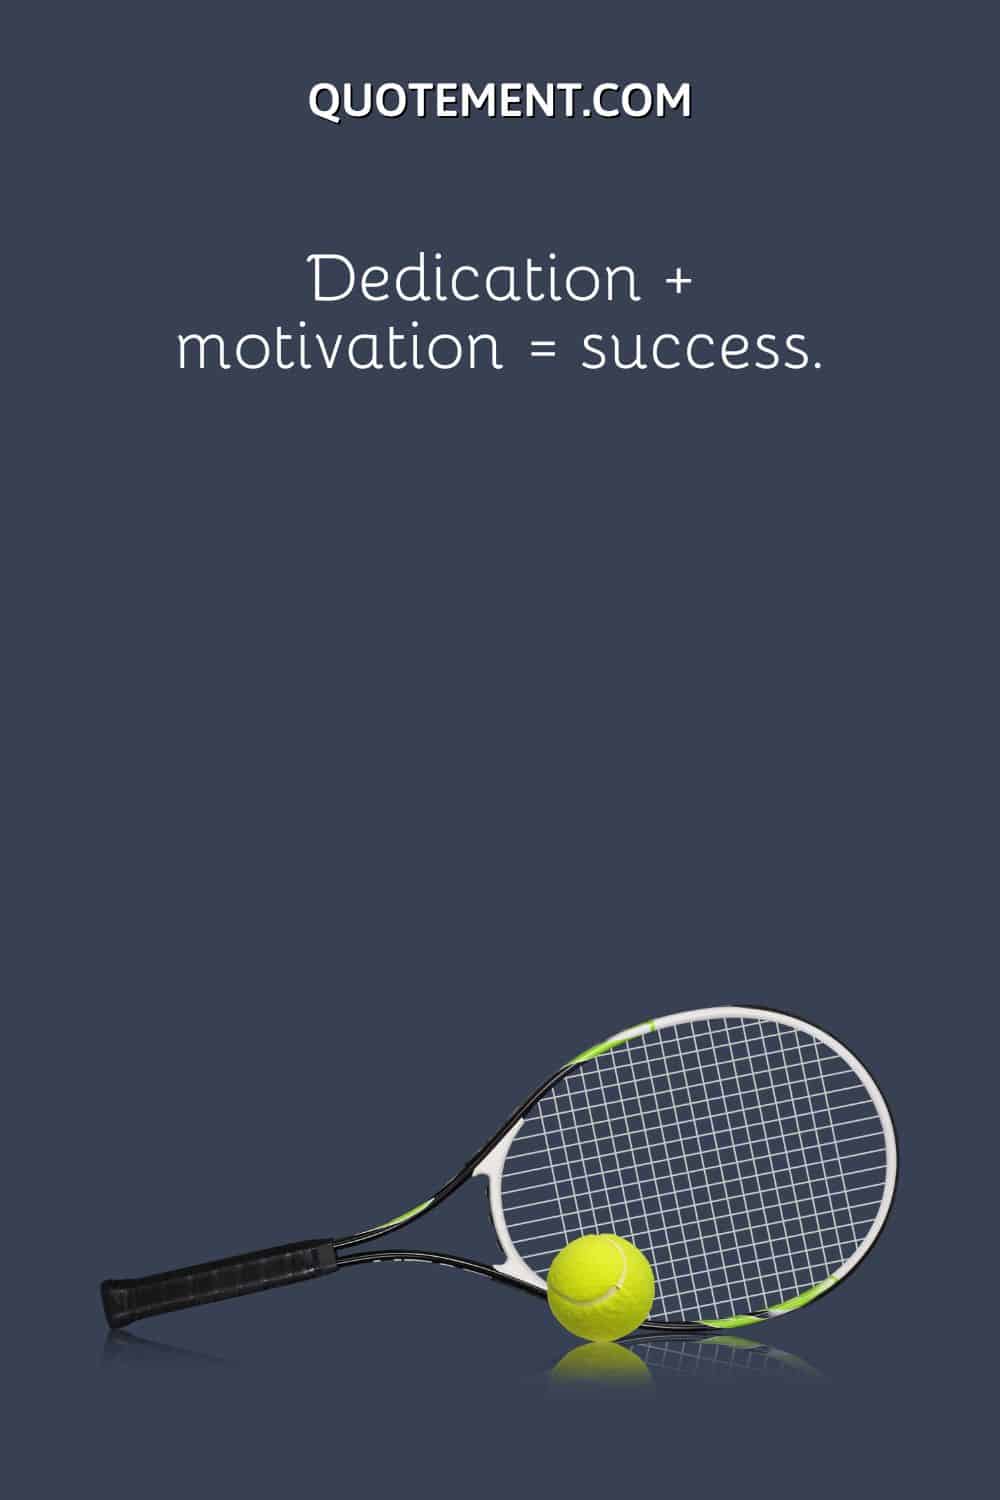 Dedication + motivation = success.